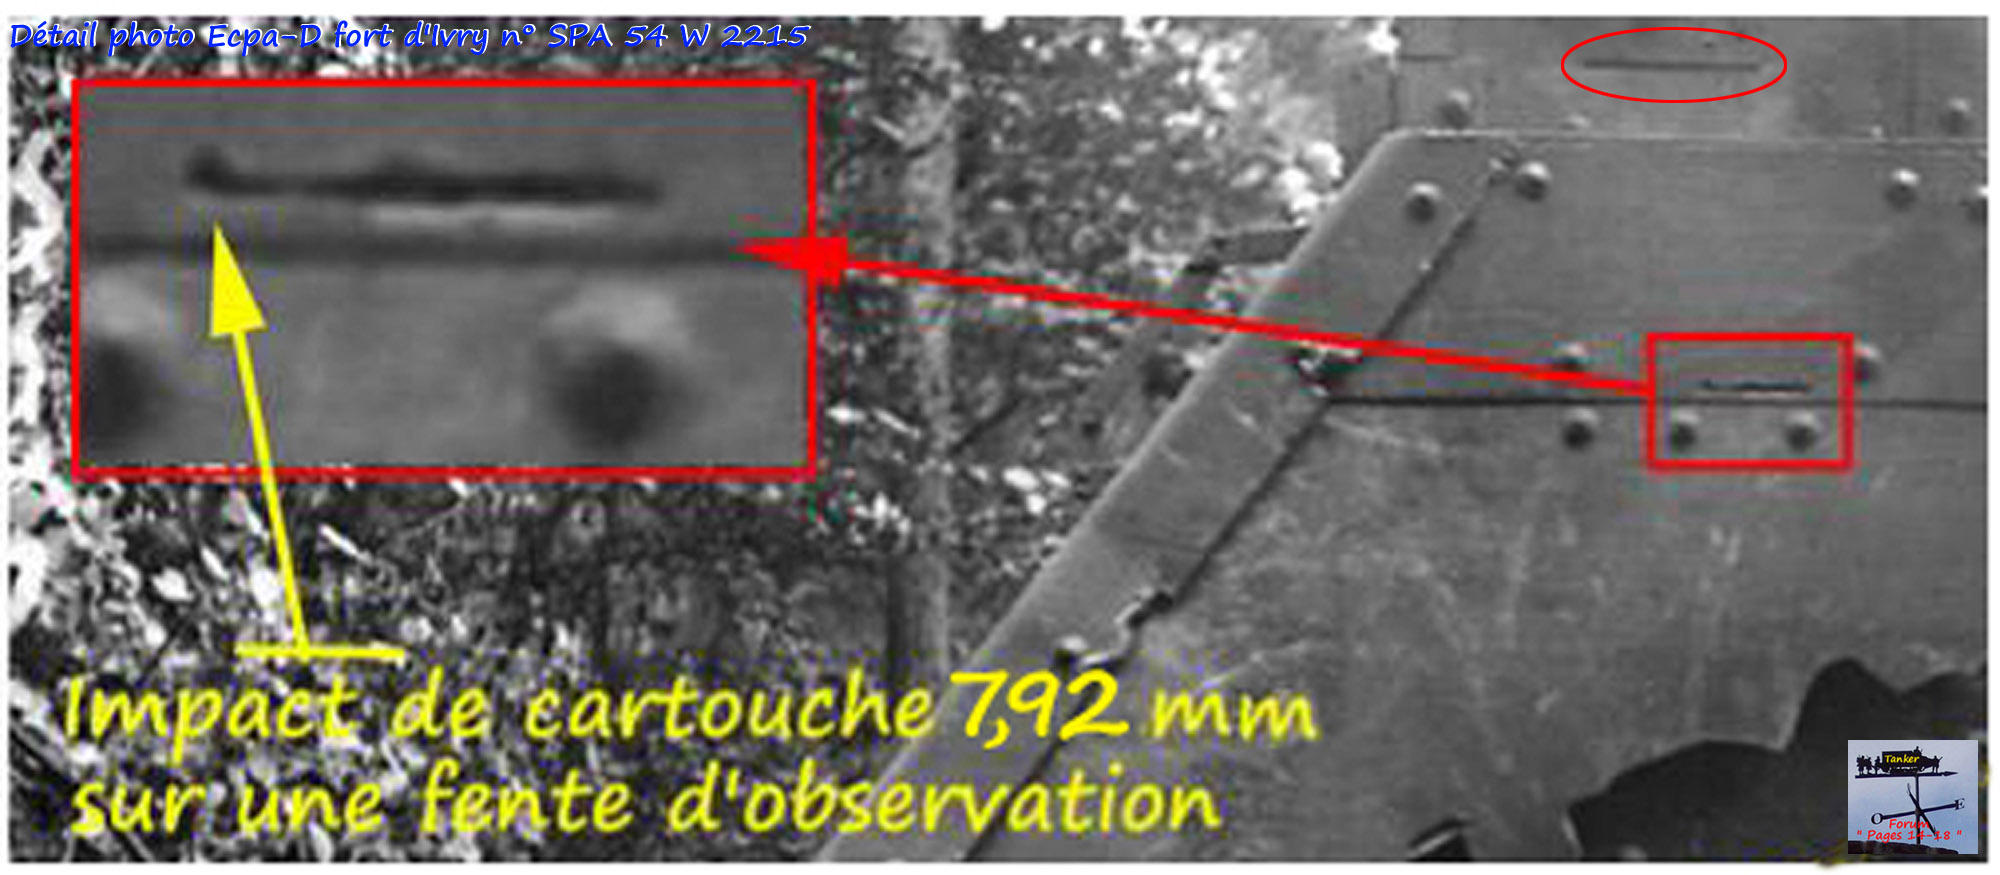 07 - St Chamond fente d'observation.jpg